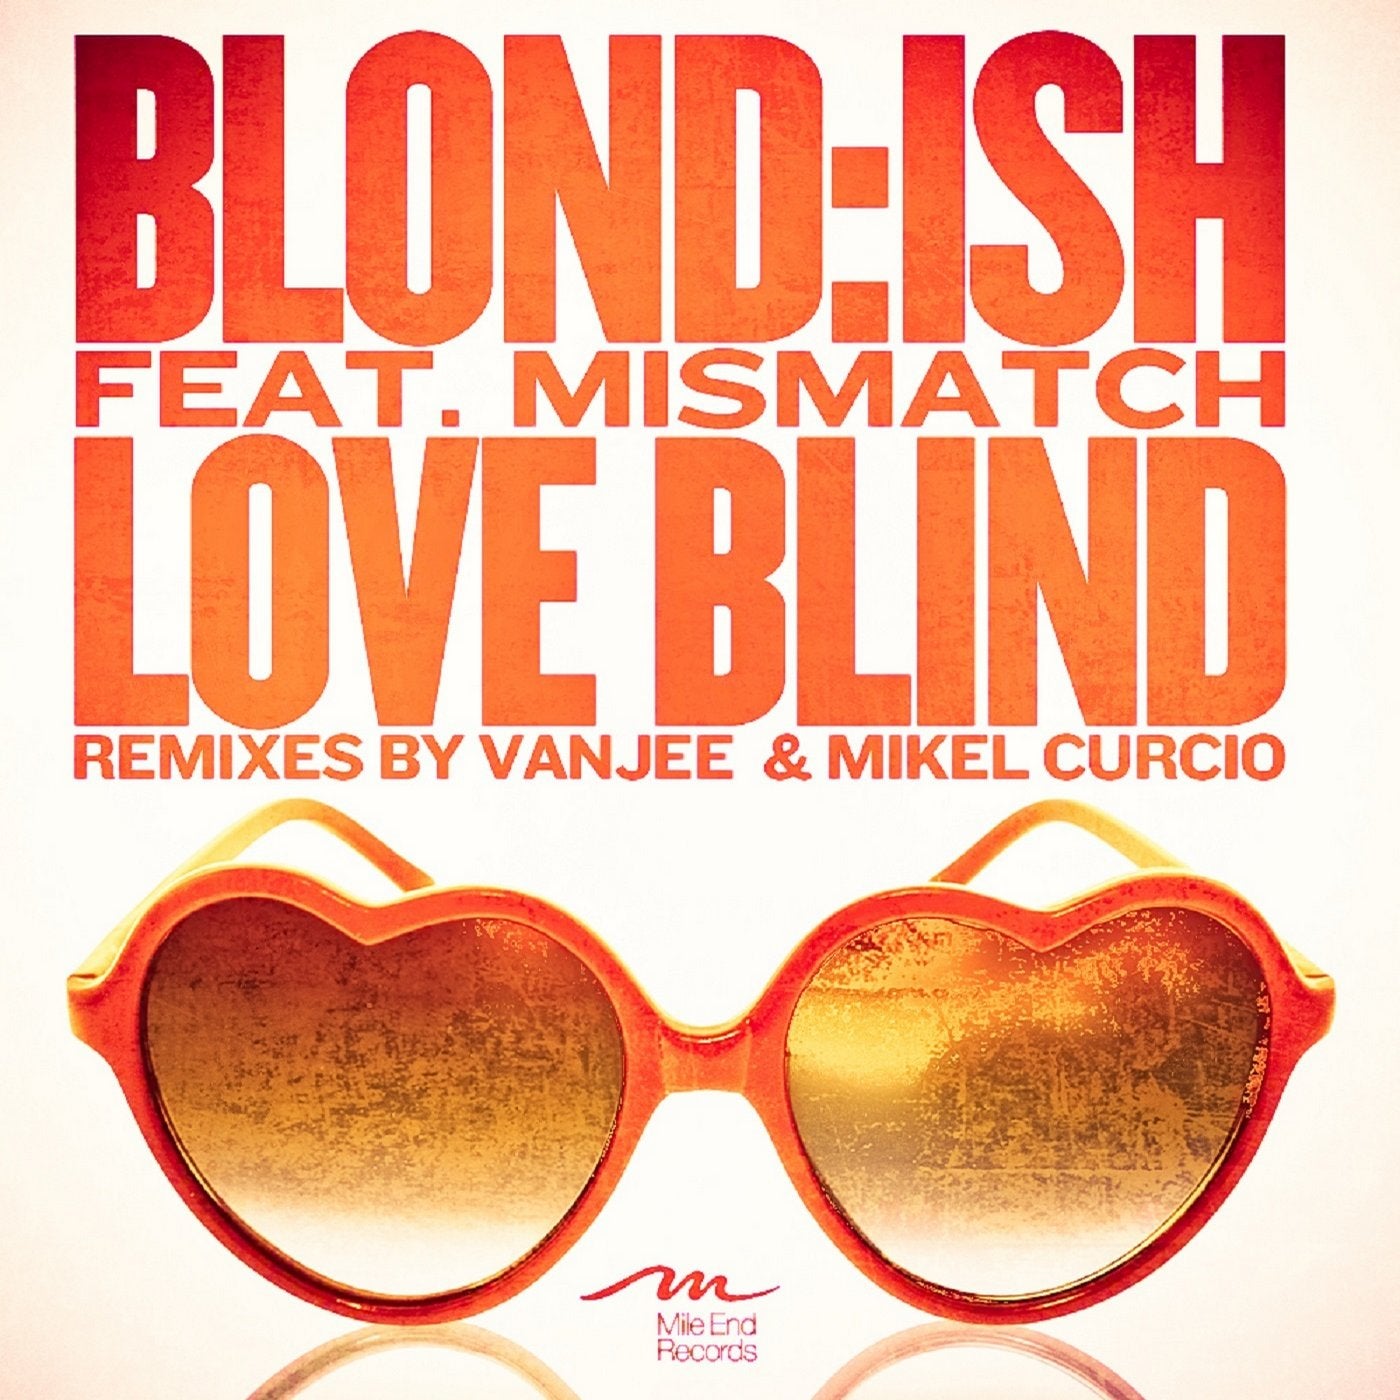 Love Blind feat. Mismatch